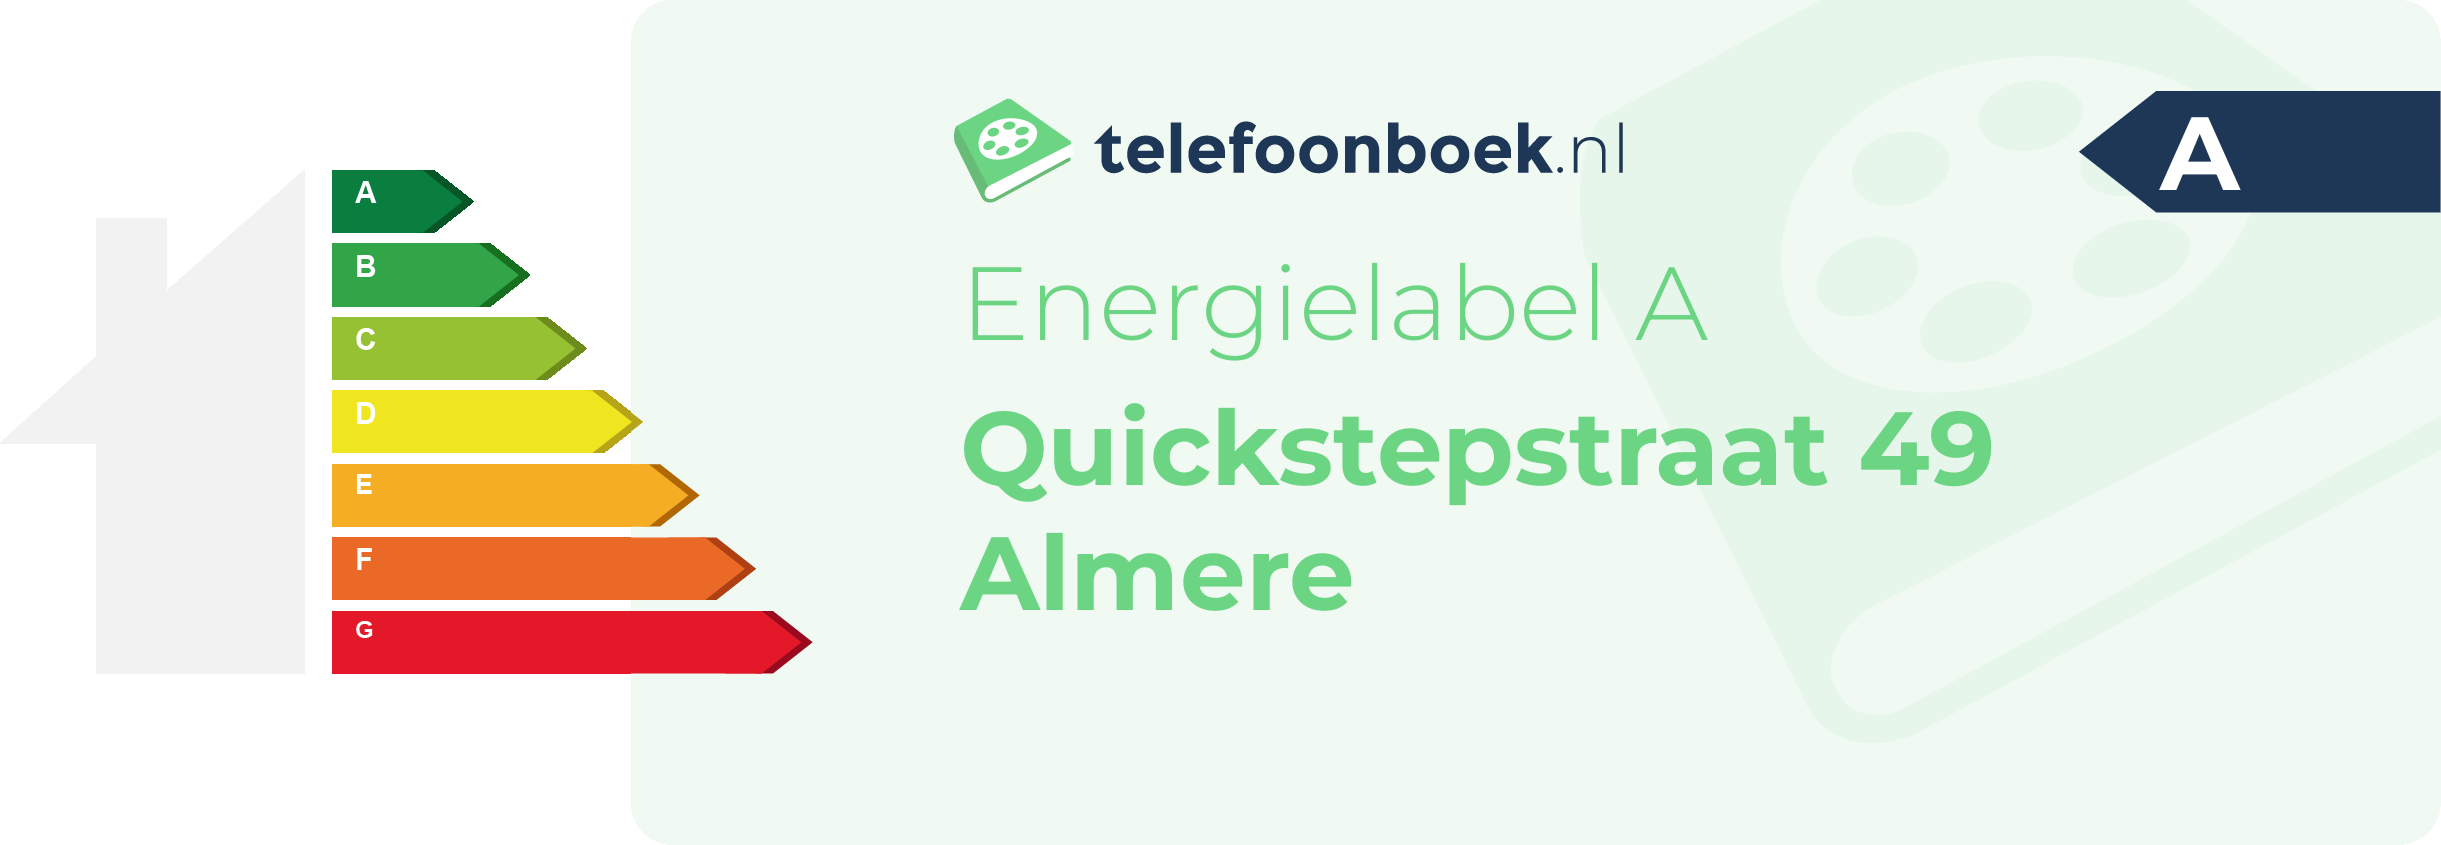 Energielabel Quickstepstraat 49 Almere